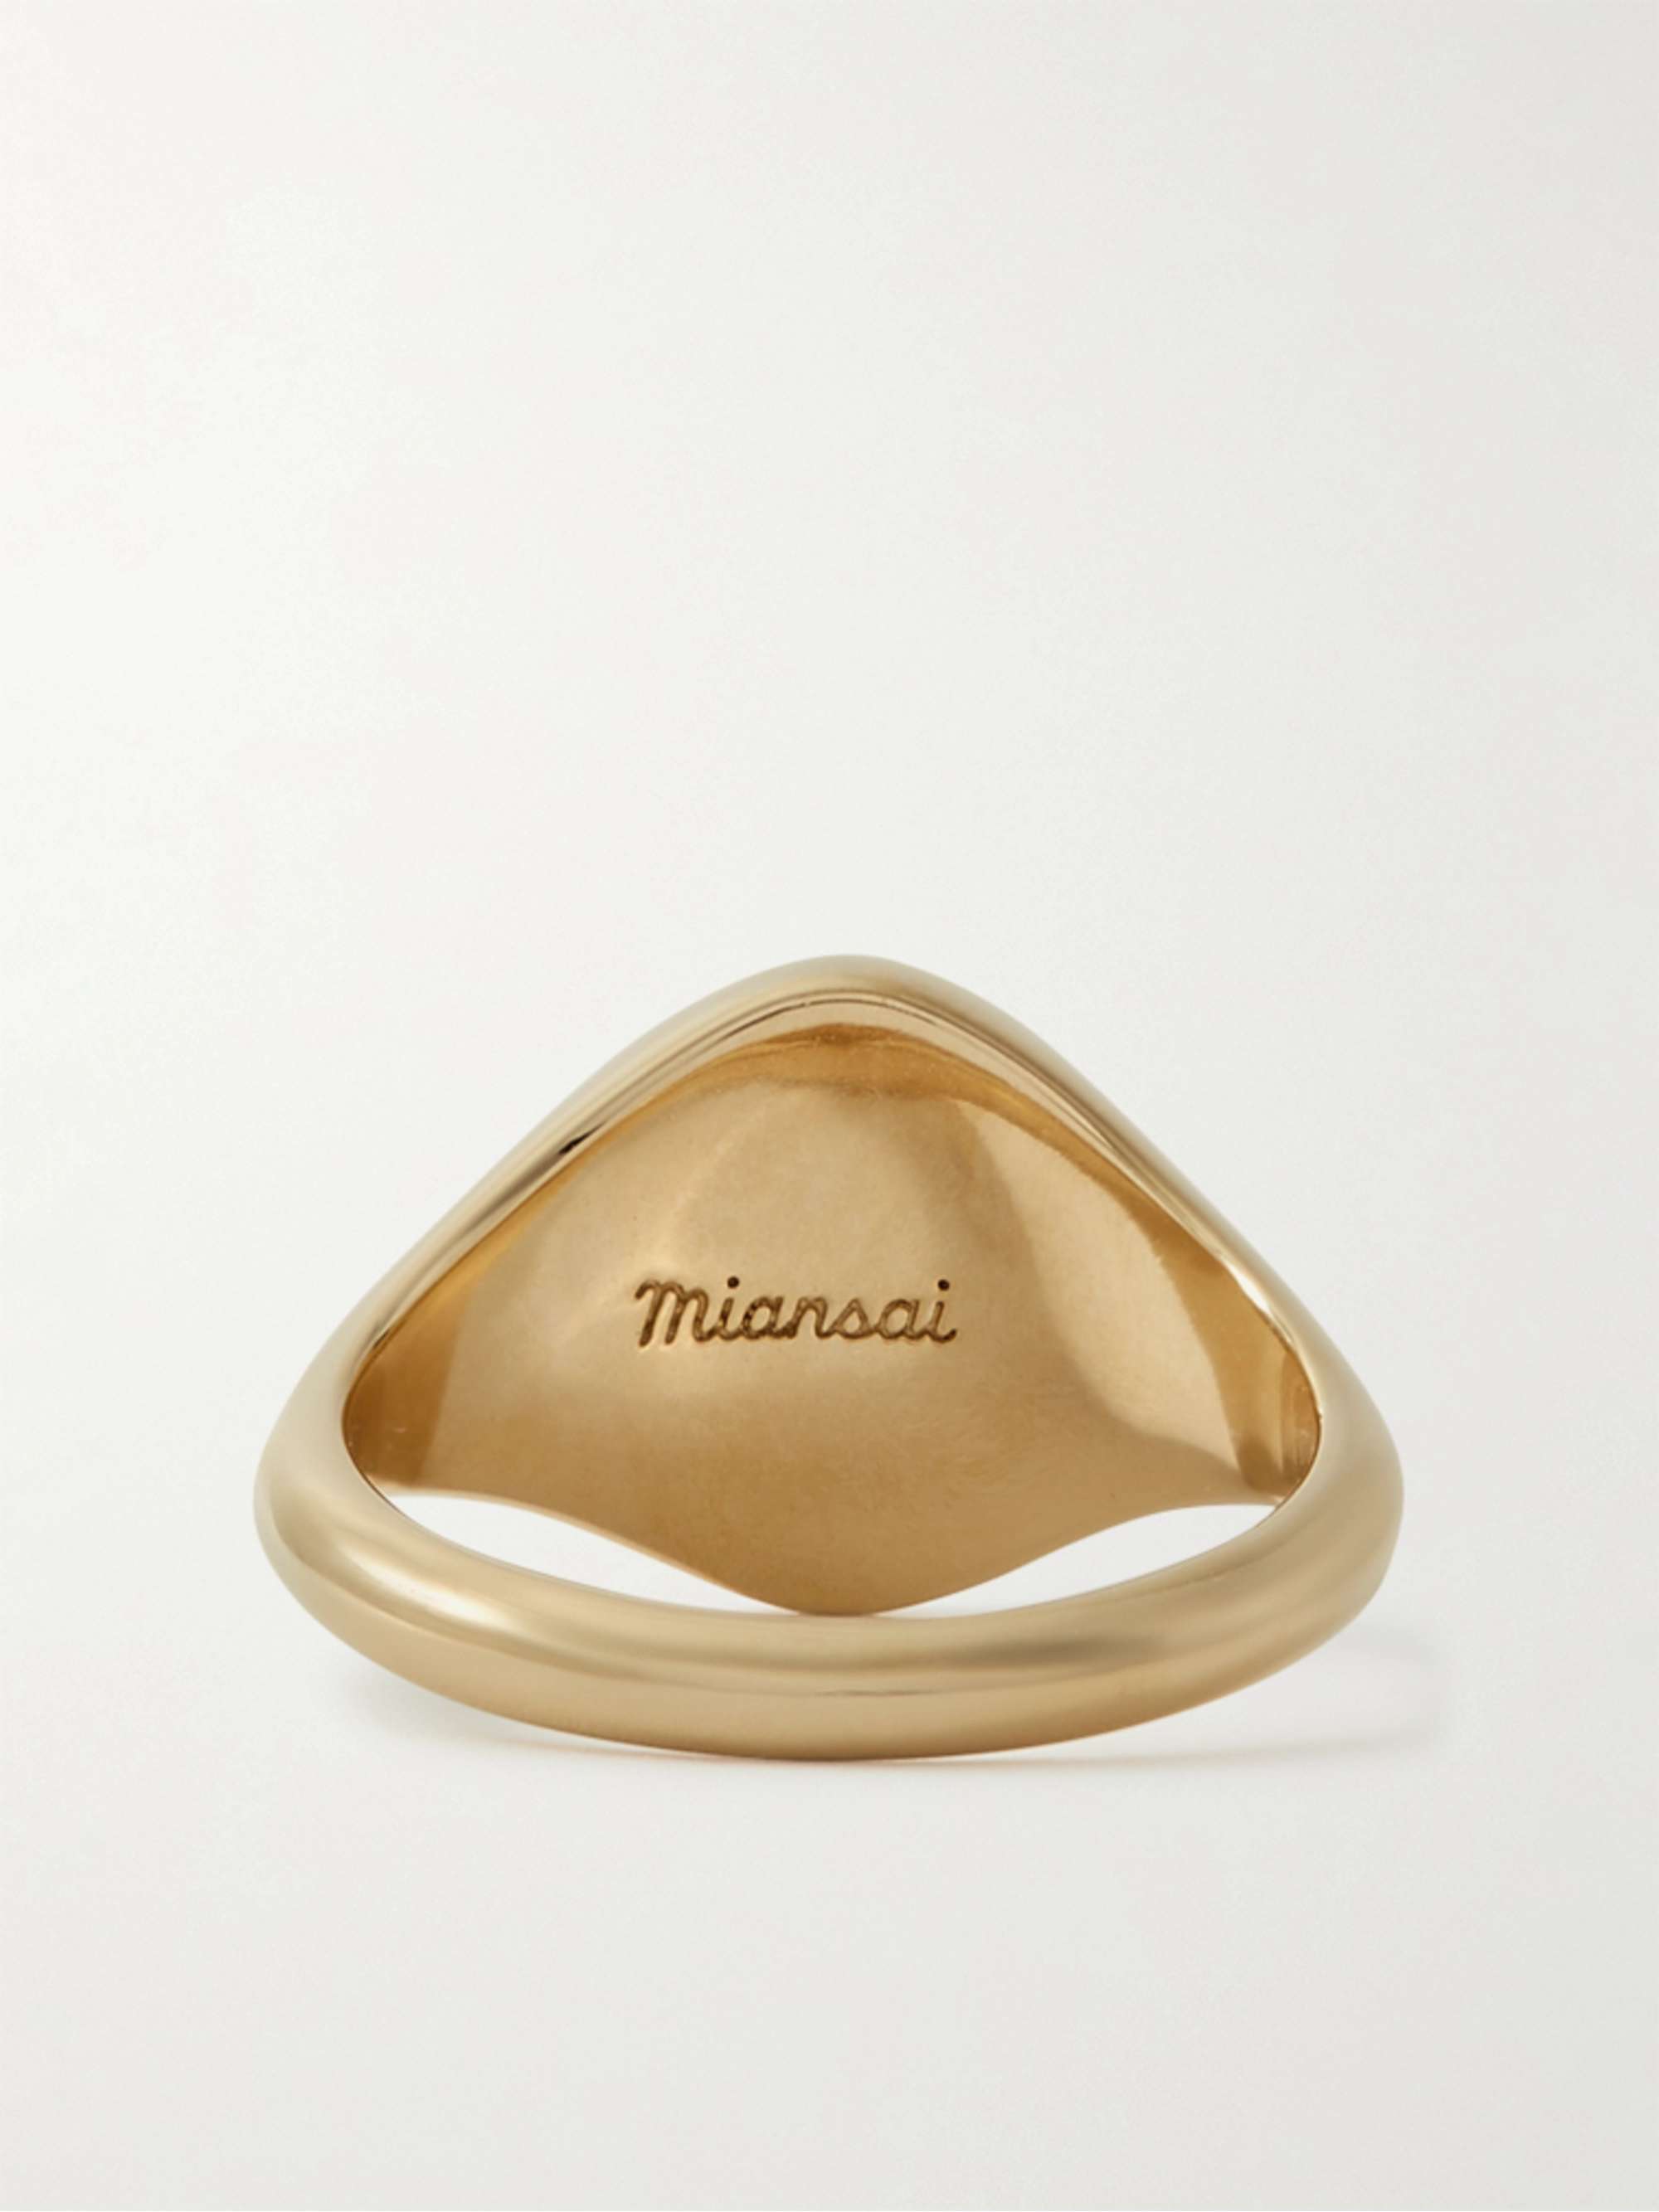 MIANSAI Gold Vermeil and Enamel Signet Ring